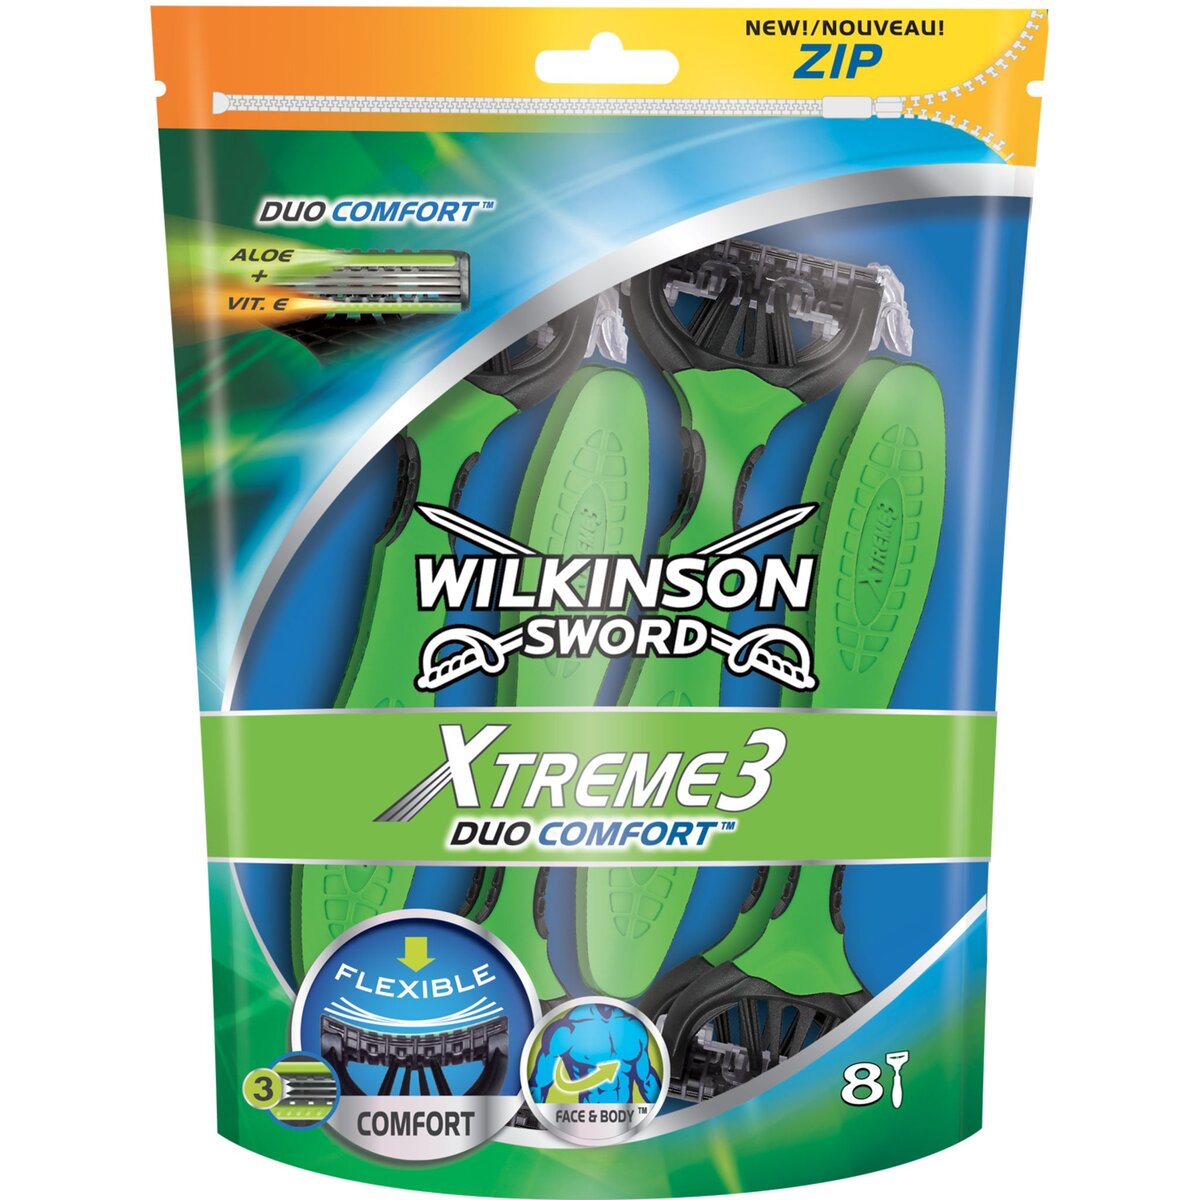 WILKINSON Xtreme 3 duo comfort rasoirs jetables flexible 8 rasoirs